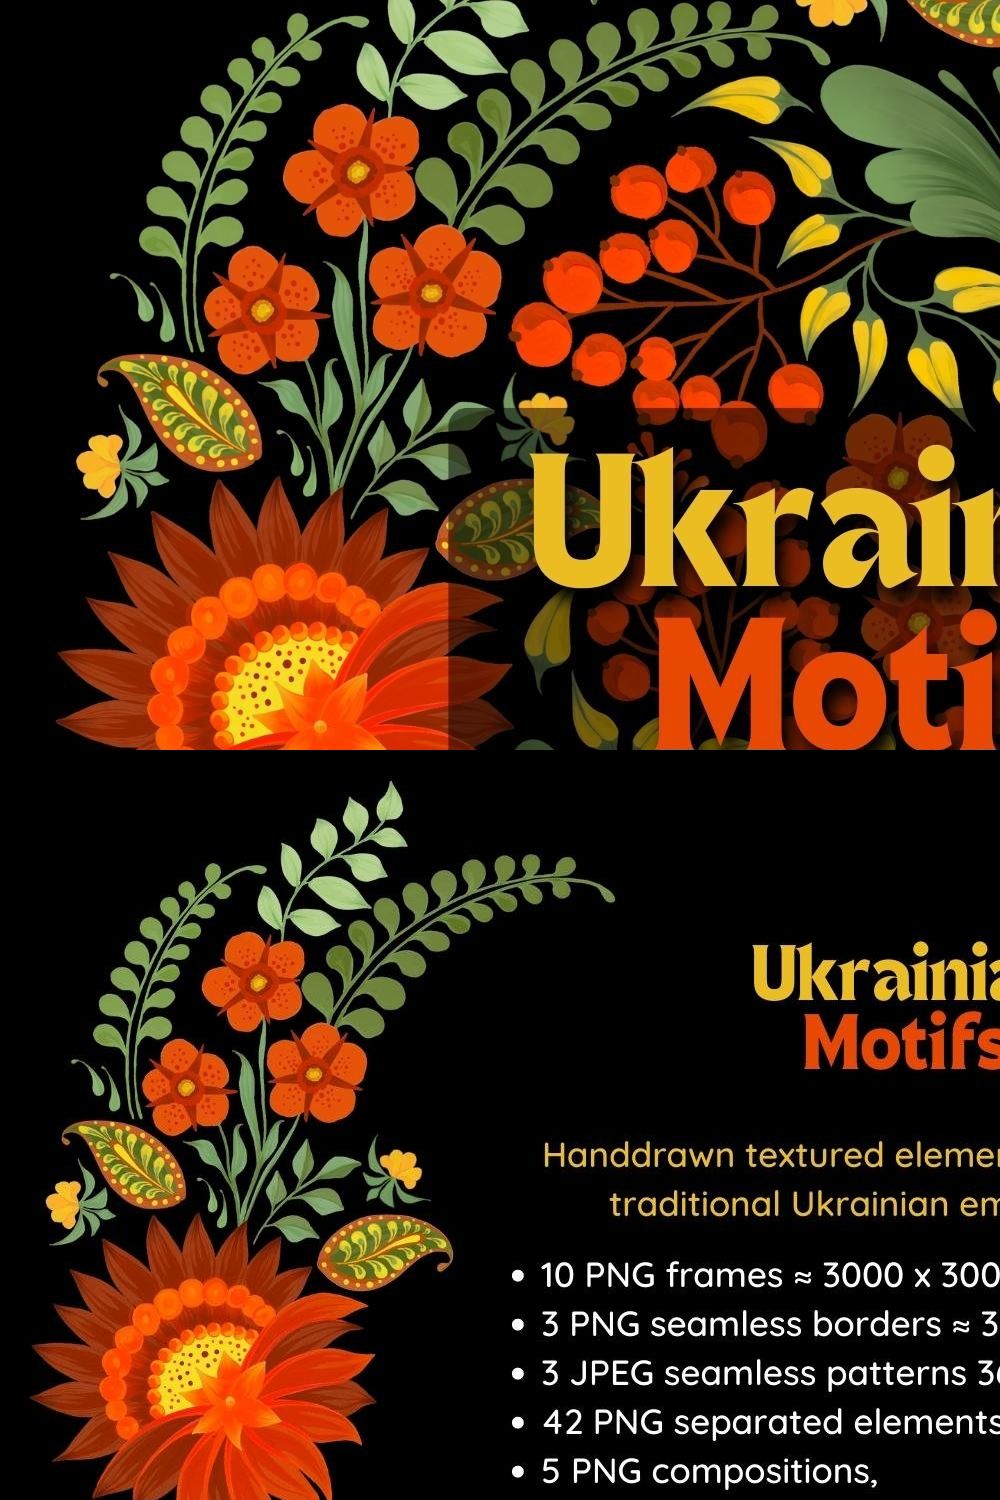 Ukrainian Motifs pinterest preview image.